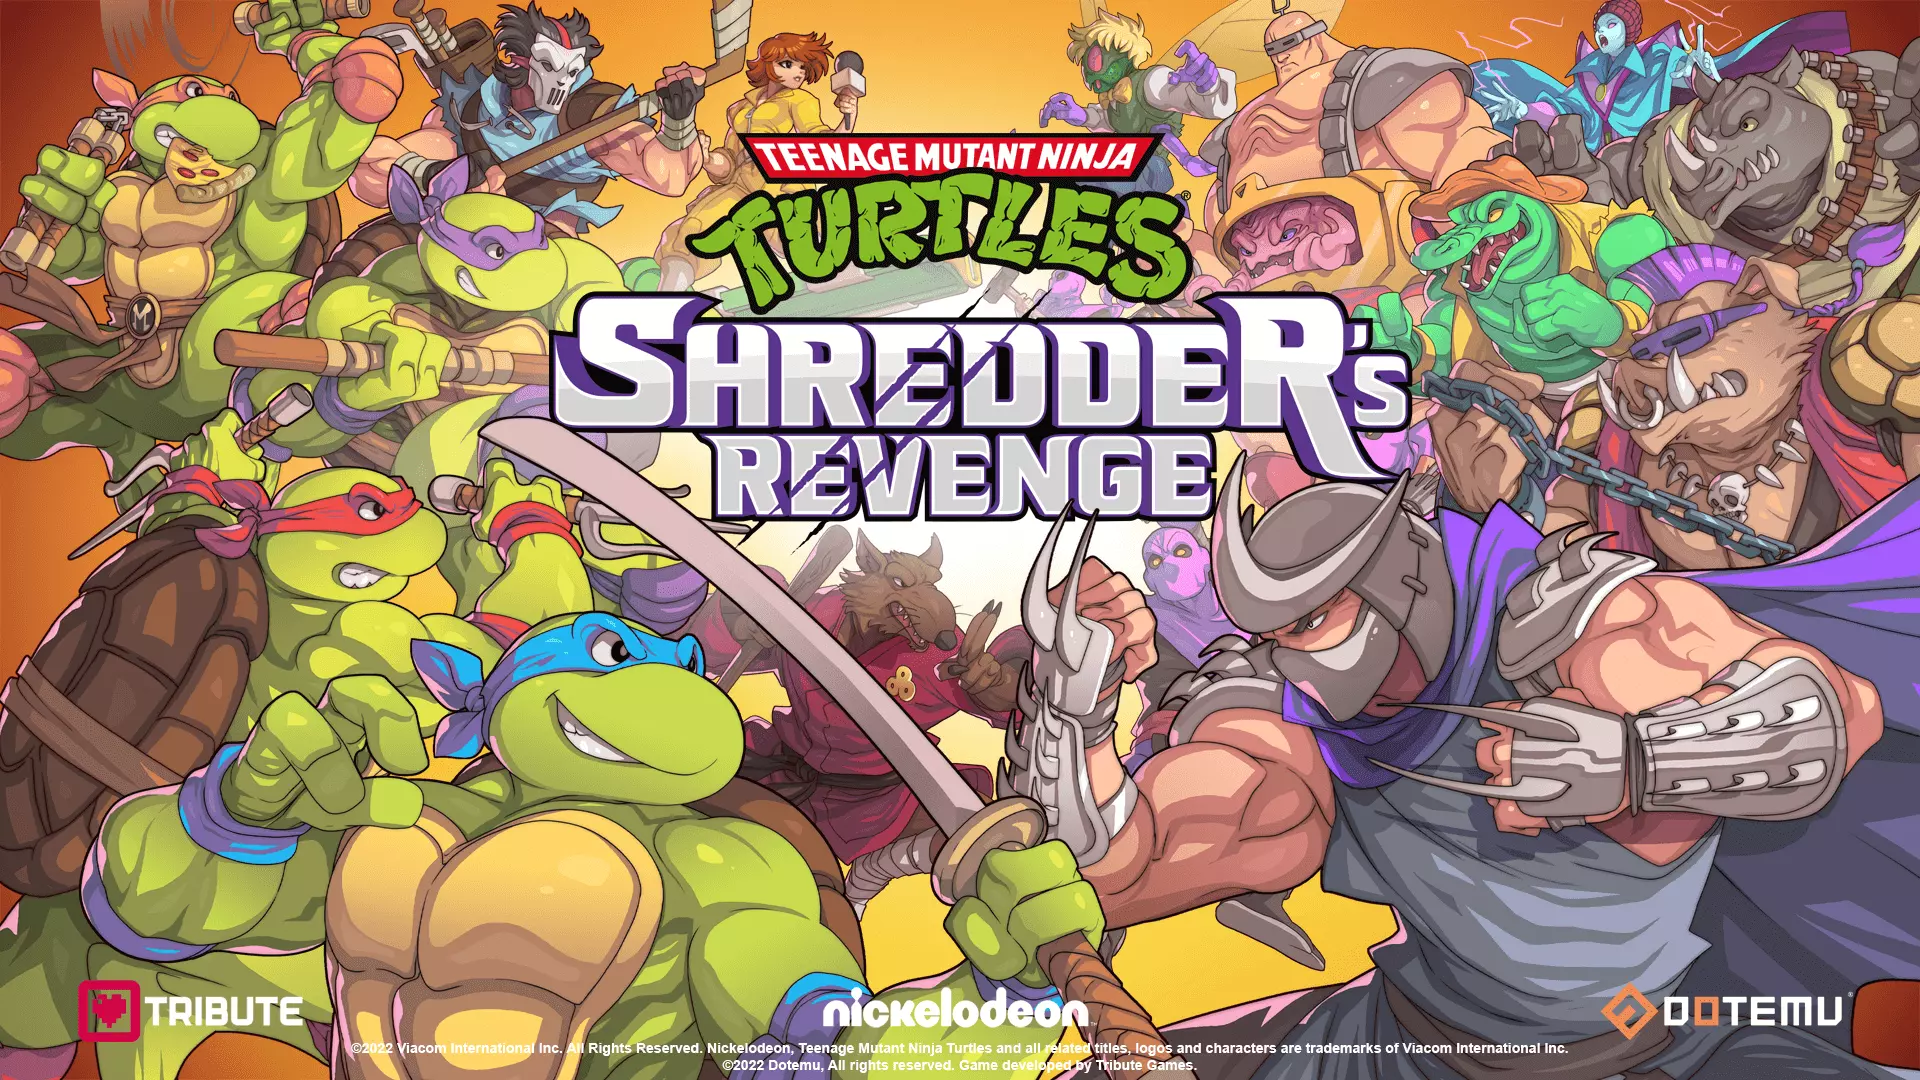 Teenage Mutant Ninja Turtles: Shredder's Revenge — игра в жанре beat 'em up, разработанная Tribute Games и изданная Dotemu.